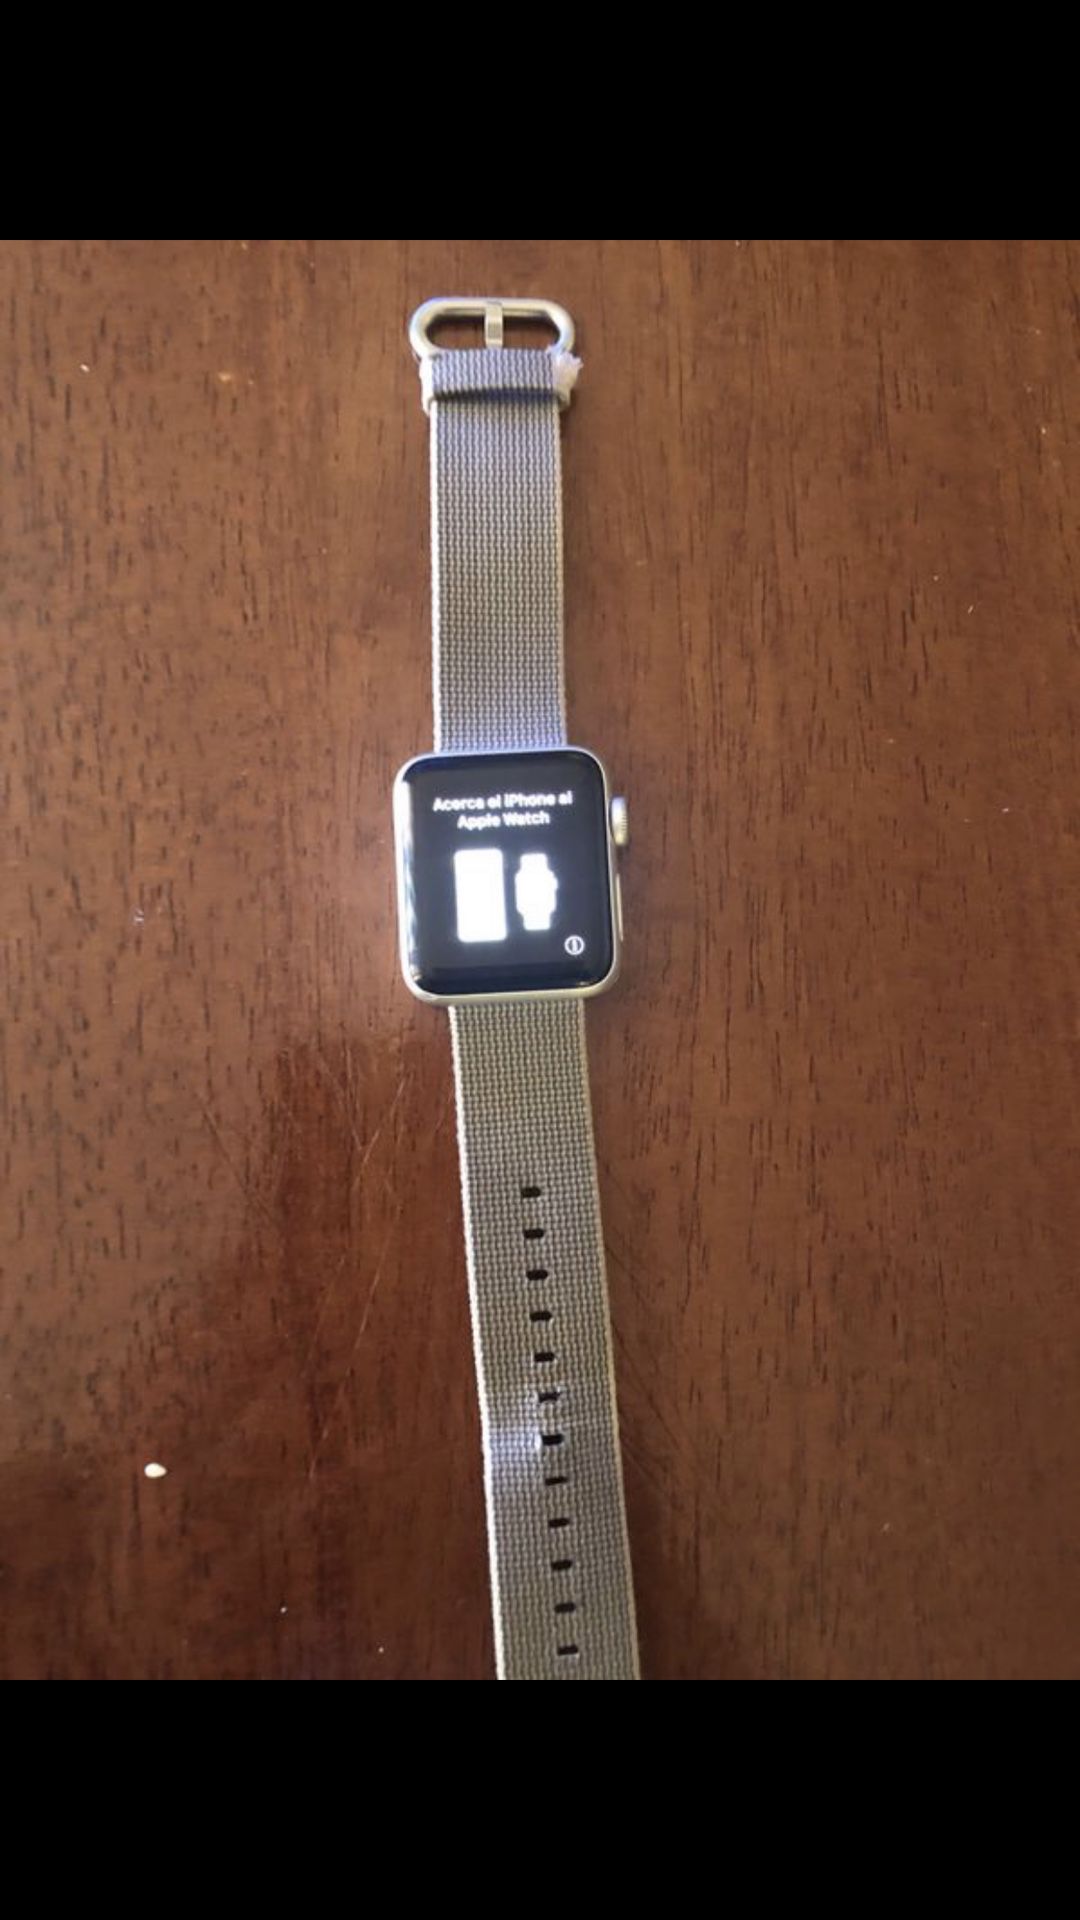 Apple Watch series 2 38(cracked screen)